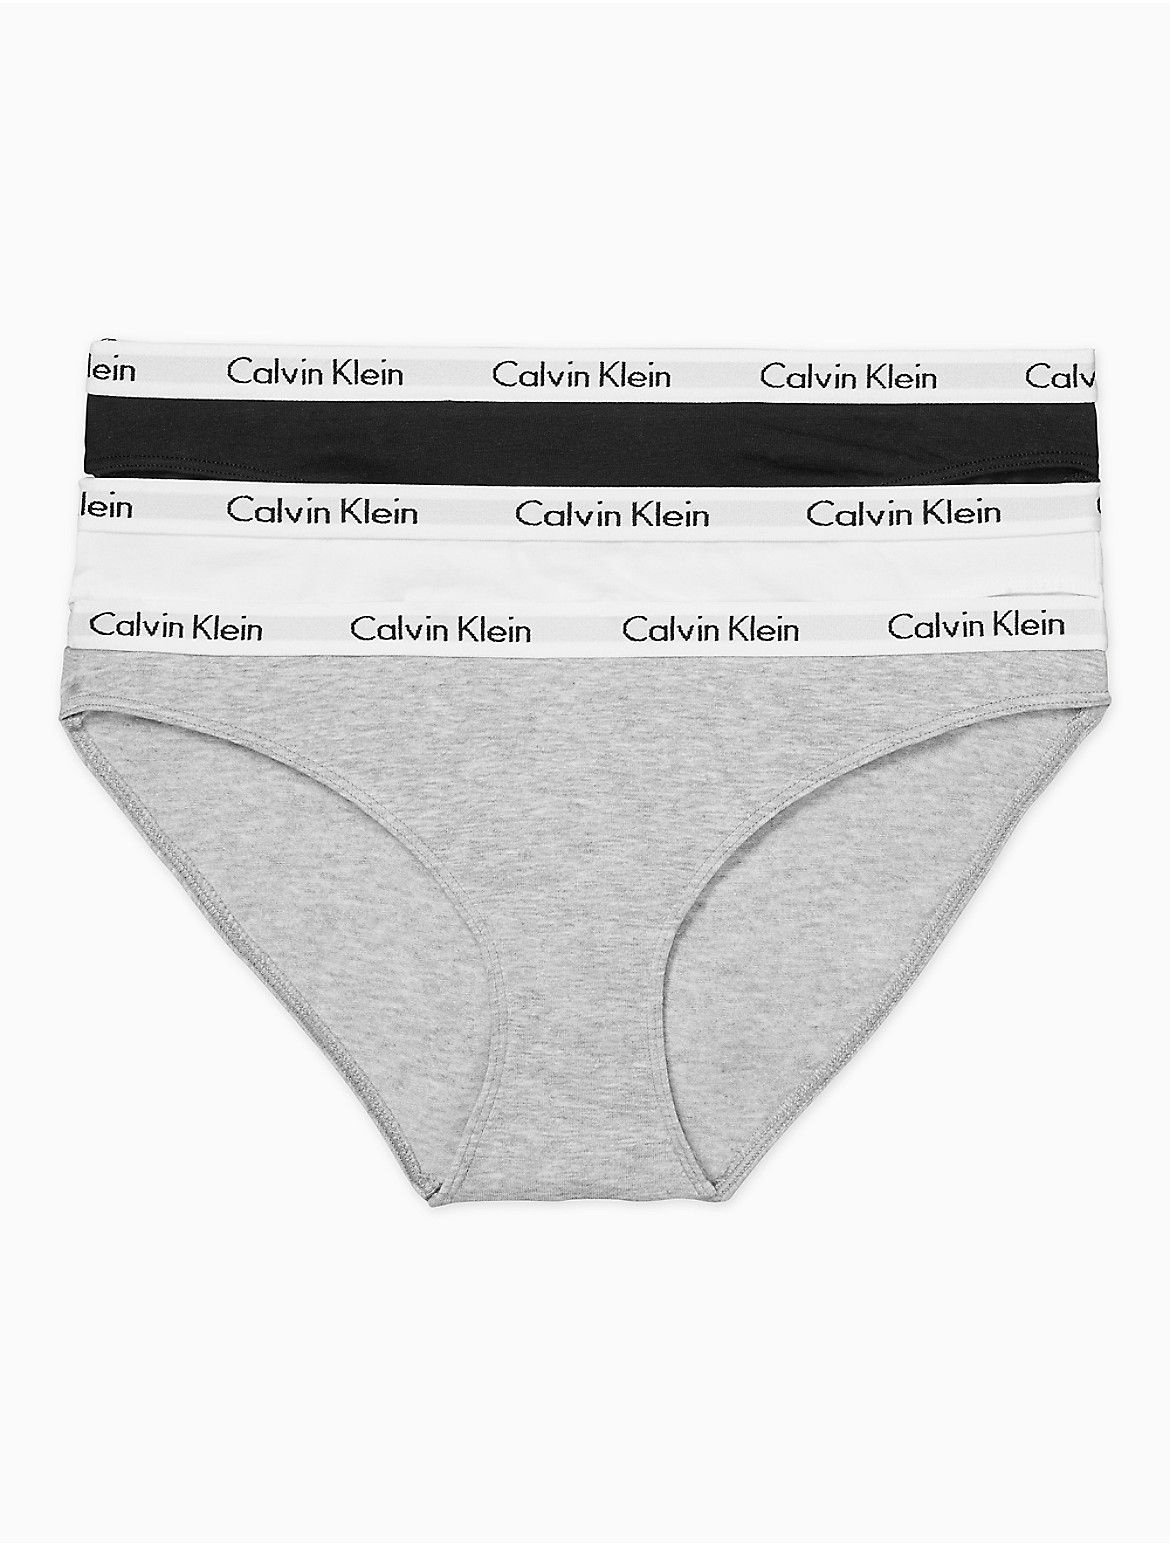 Calvin Klein Women's Carousel 3-Pack Bikini - Multi - L